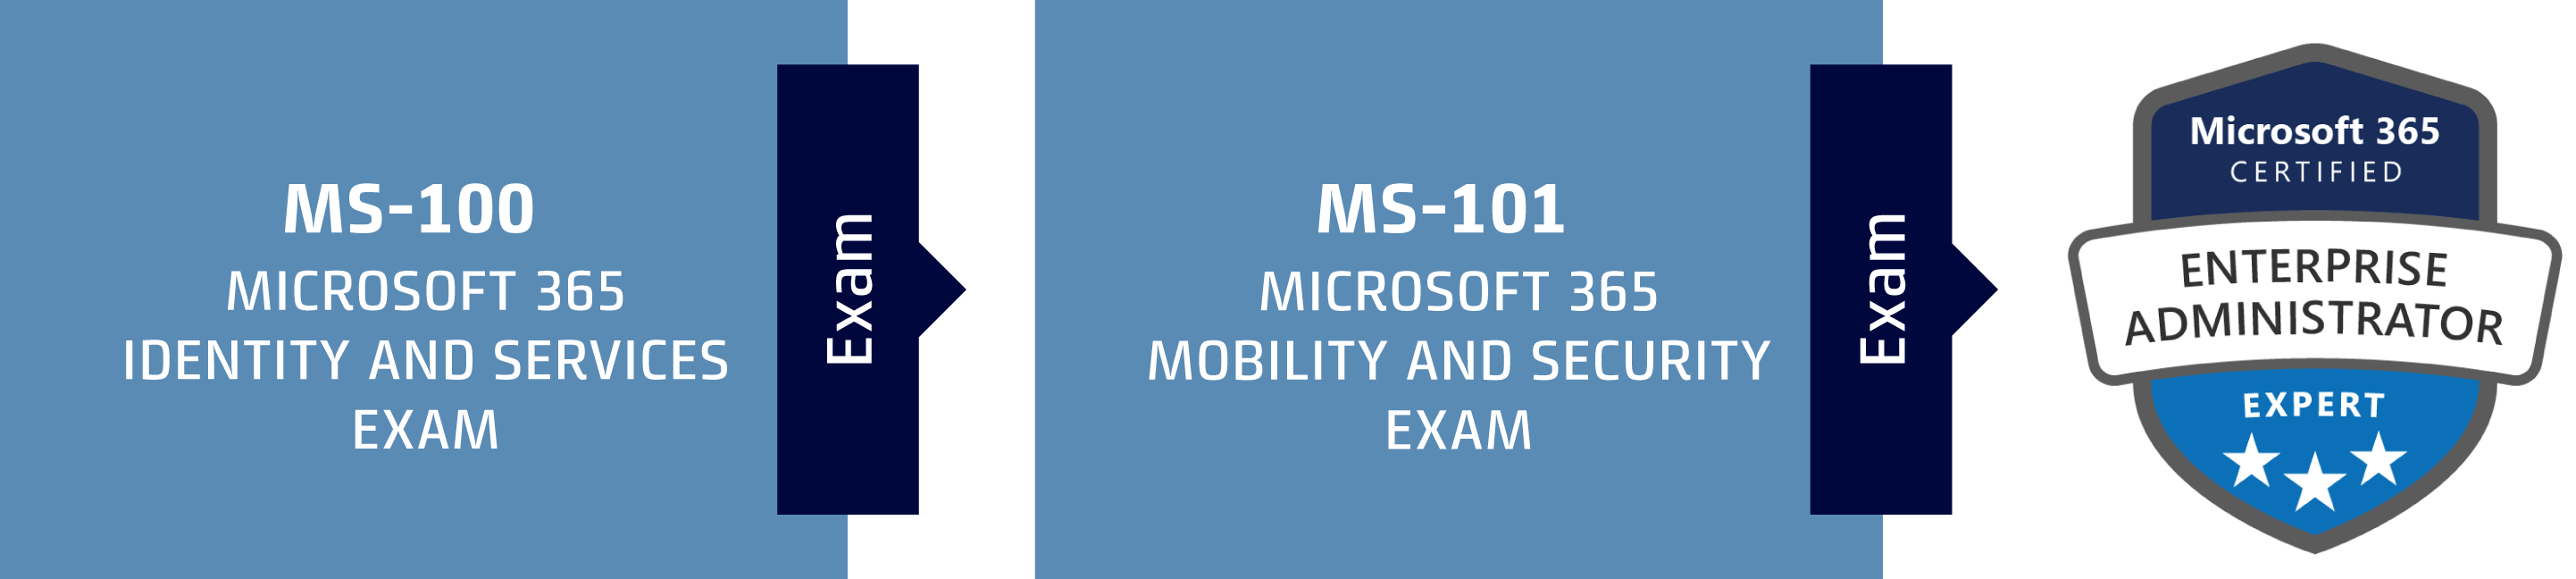 90362 - Microsoft 365 Certified Enterprise Administrator